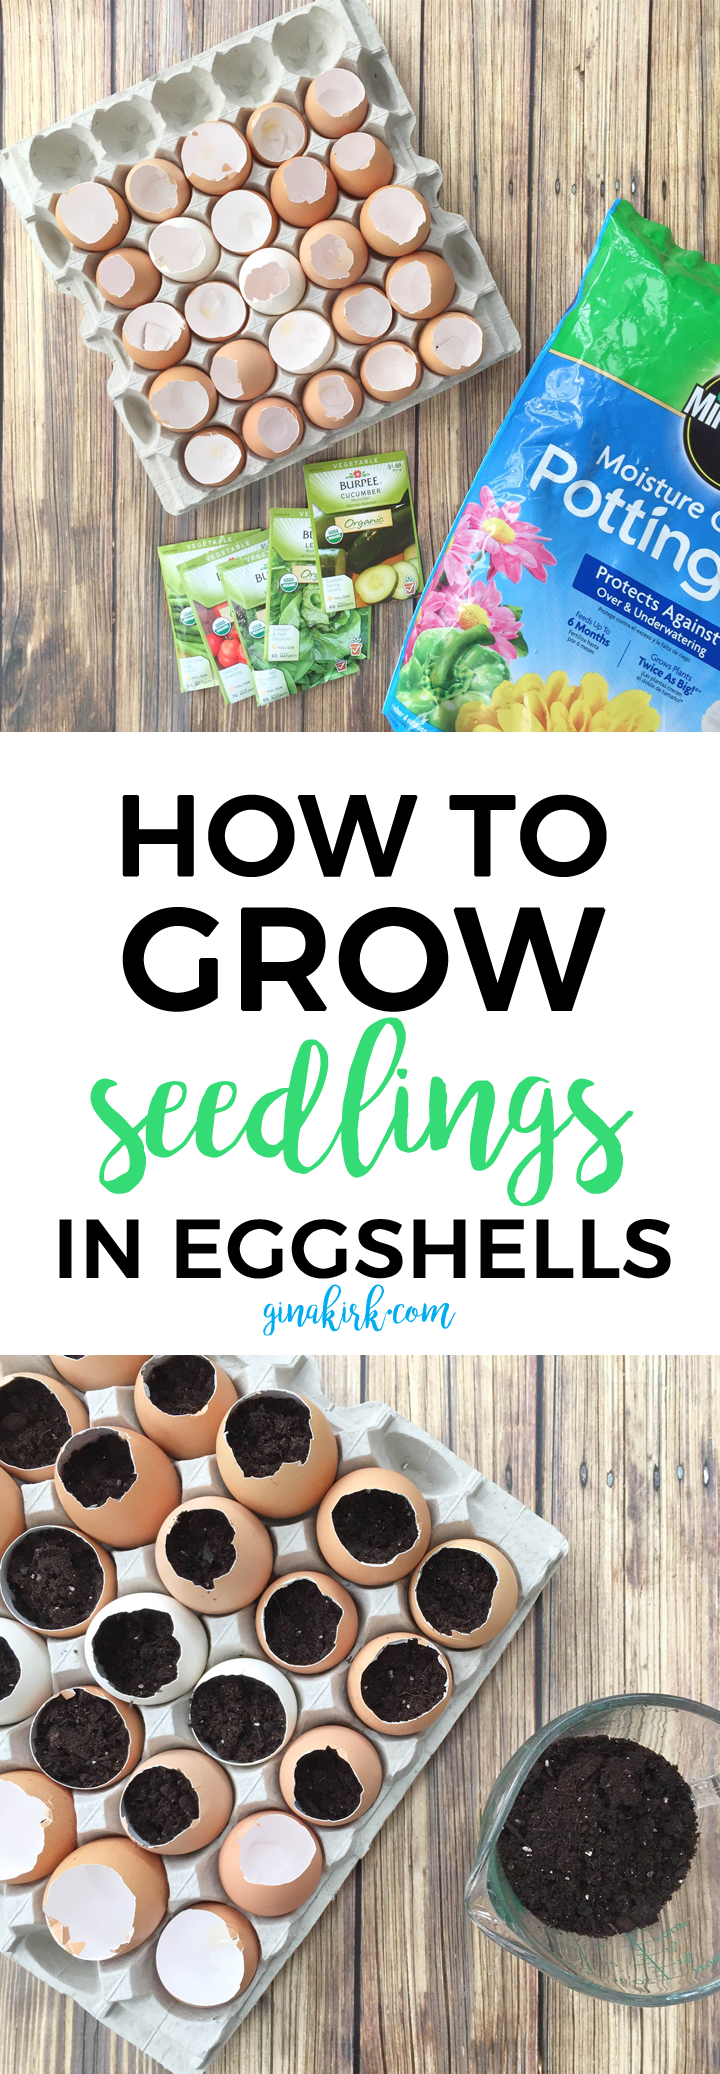 How to grow seedlings in eggshells | How to start seeds | Planting seeds | Eggshell seed starters | GinaKirk.com @ginaekirk